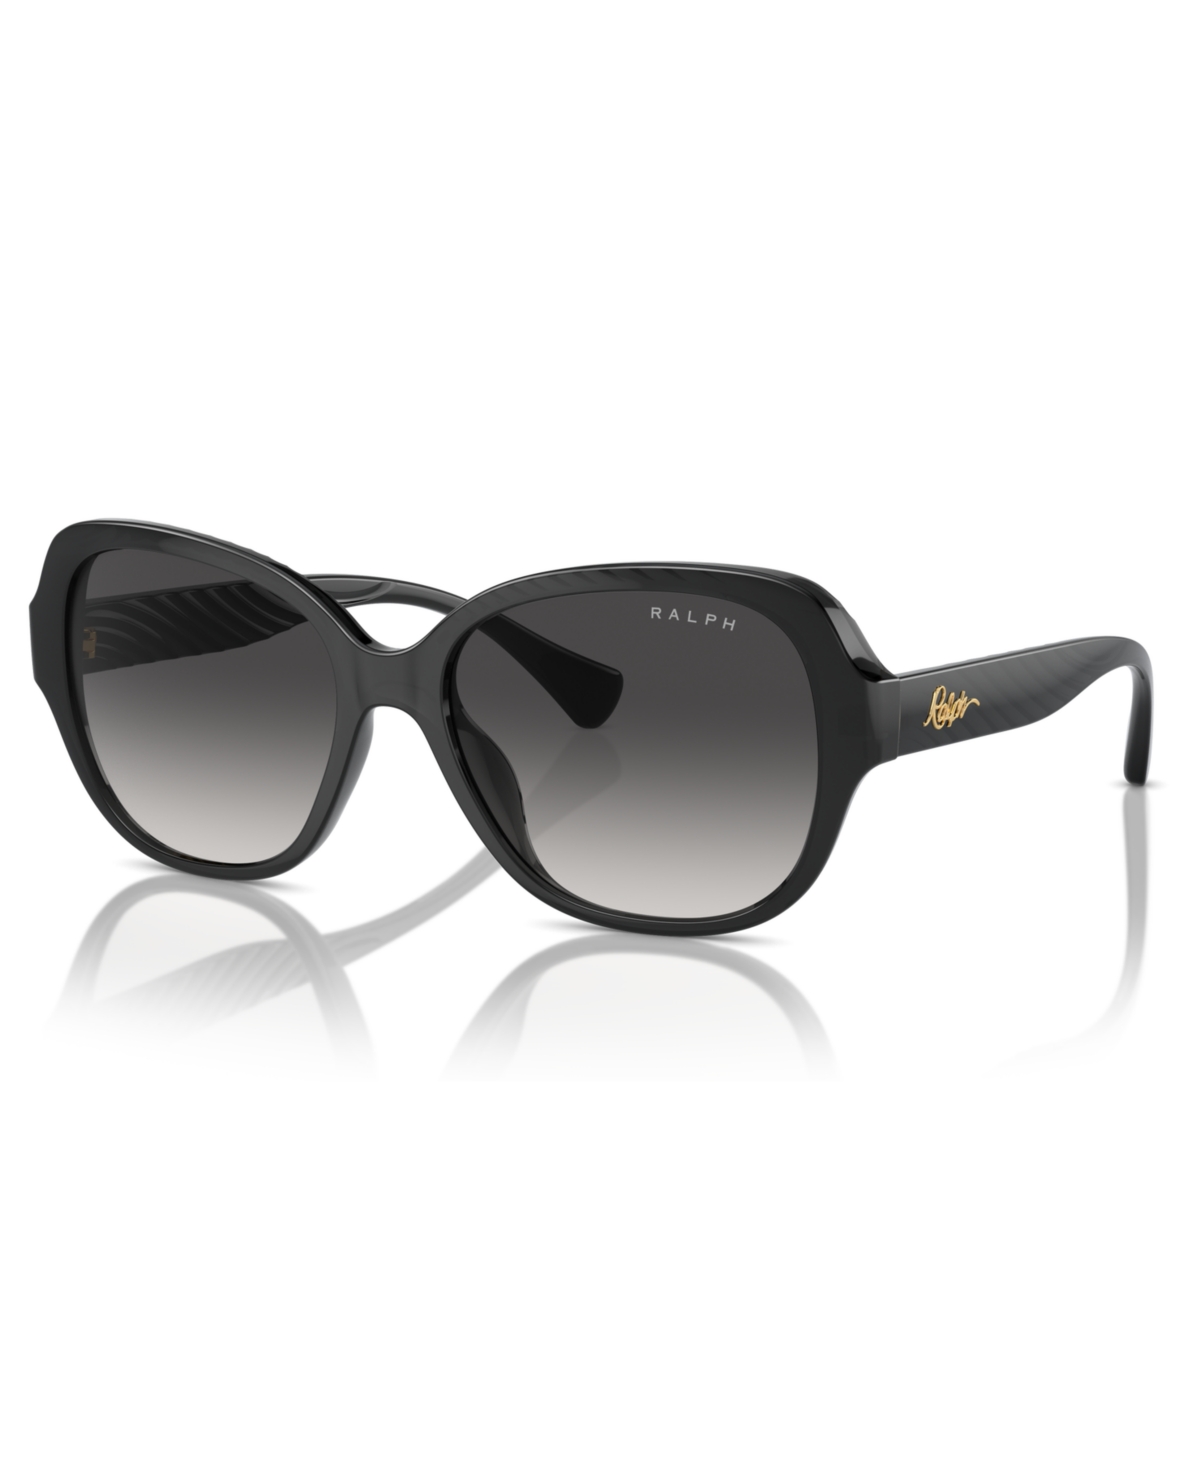 Women's Sunglasses, Ra5316U - Shiny Transparent Black